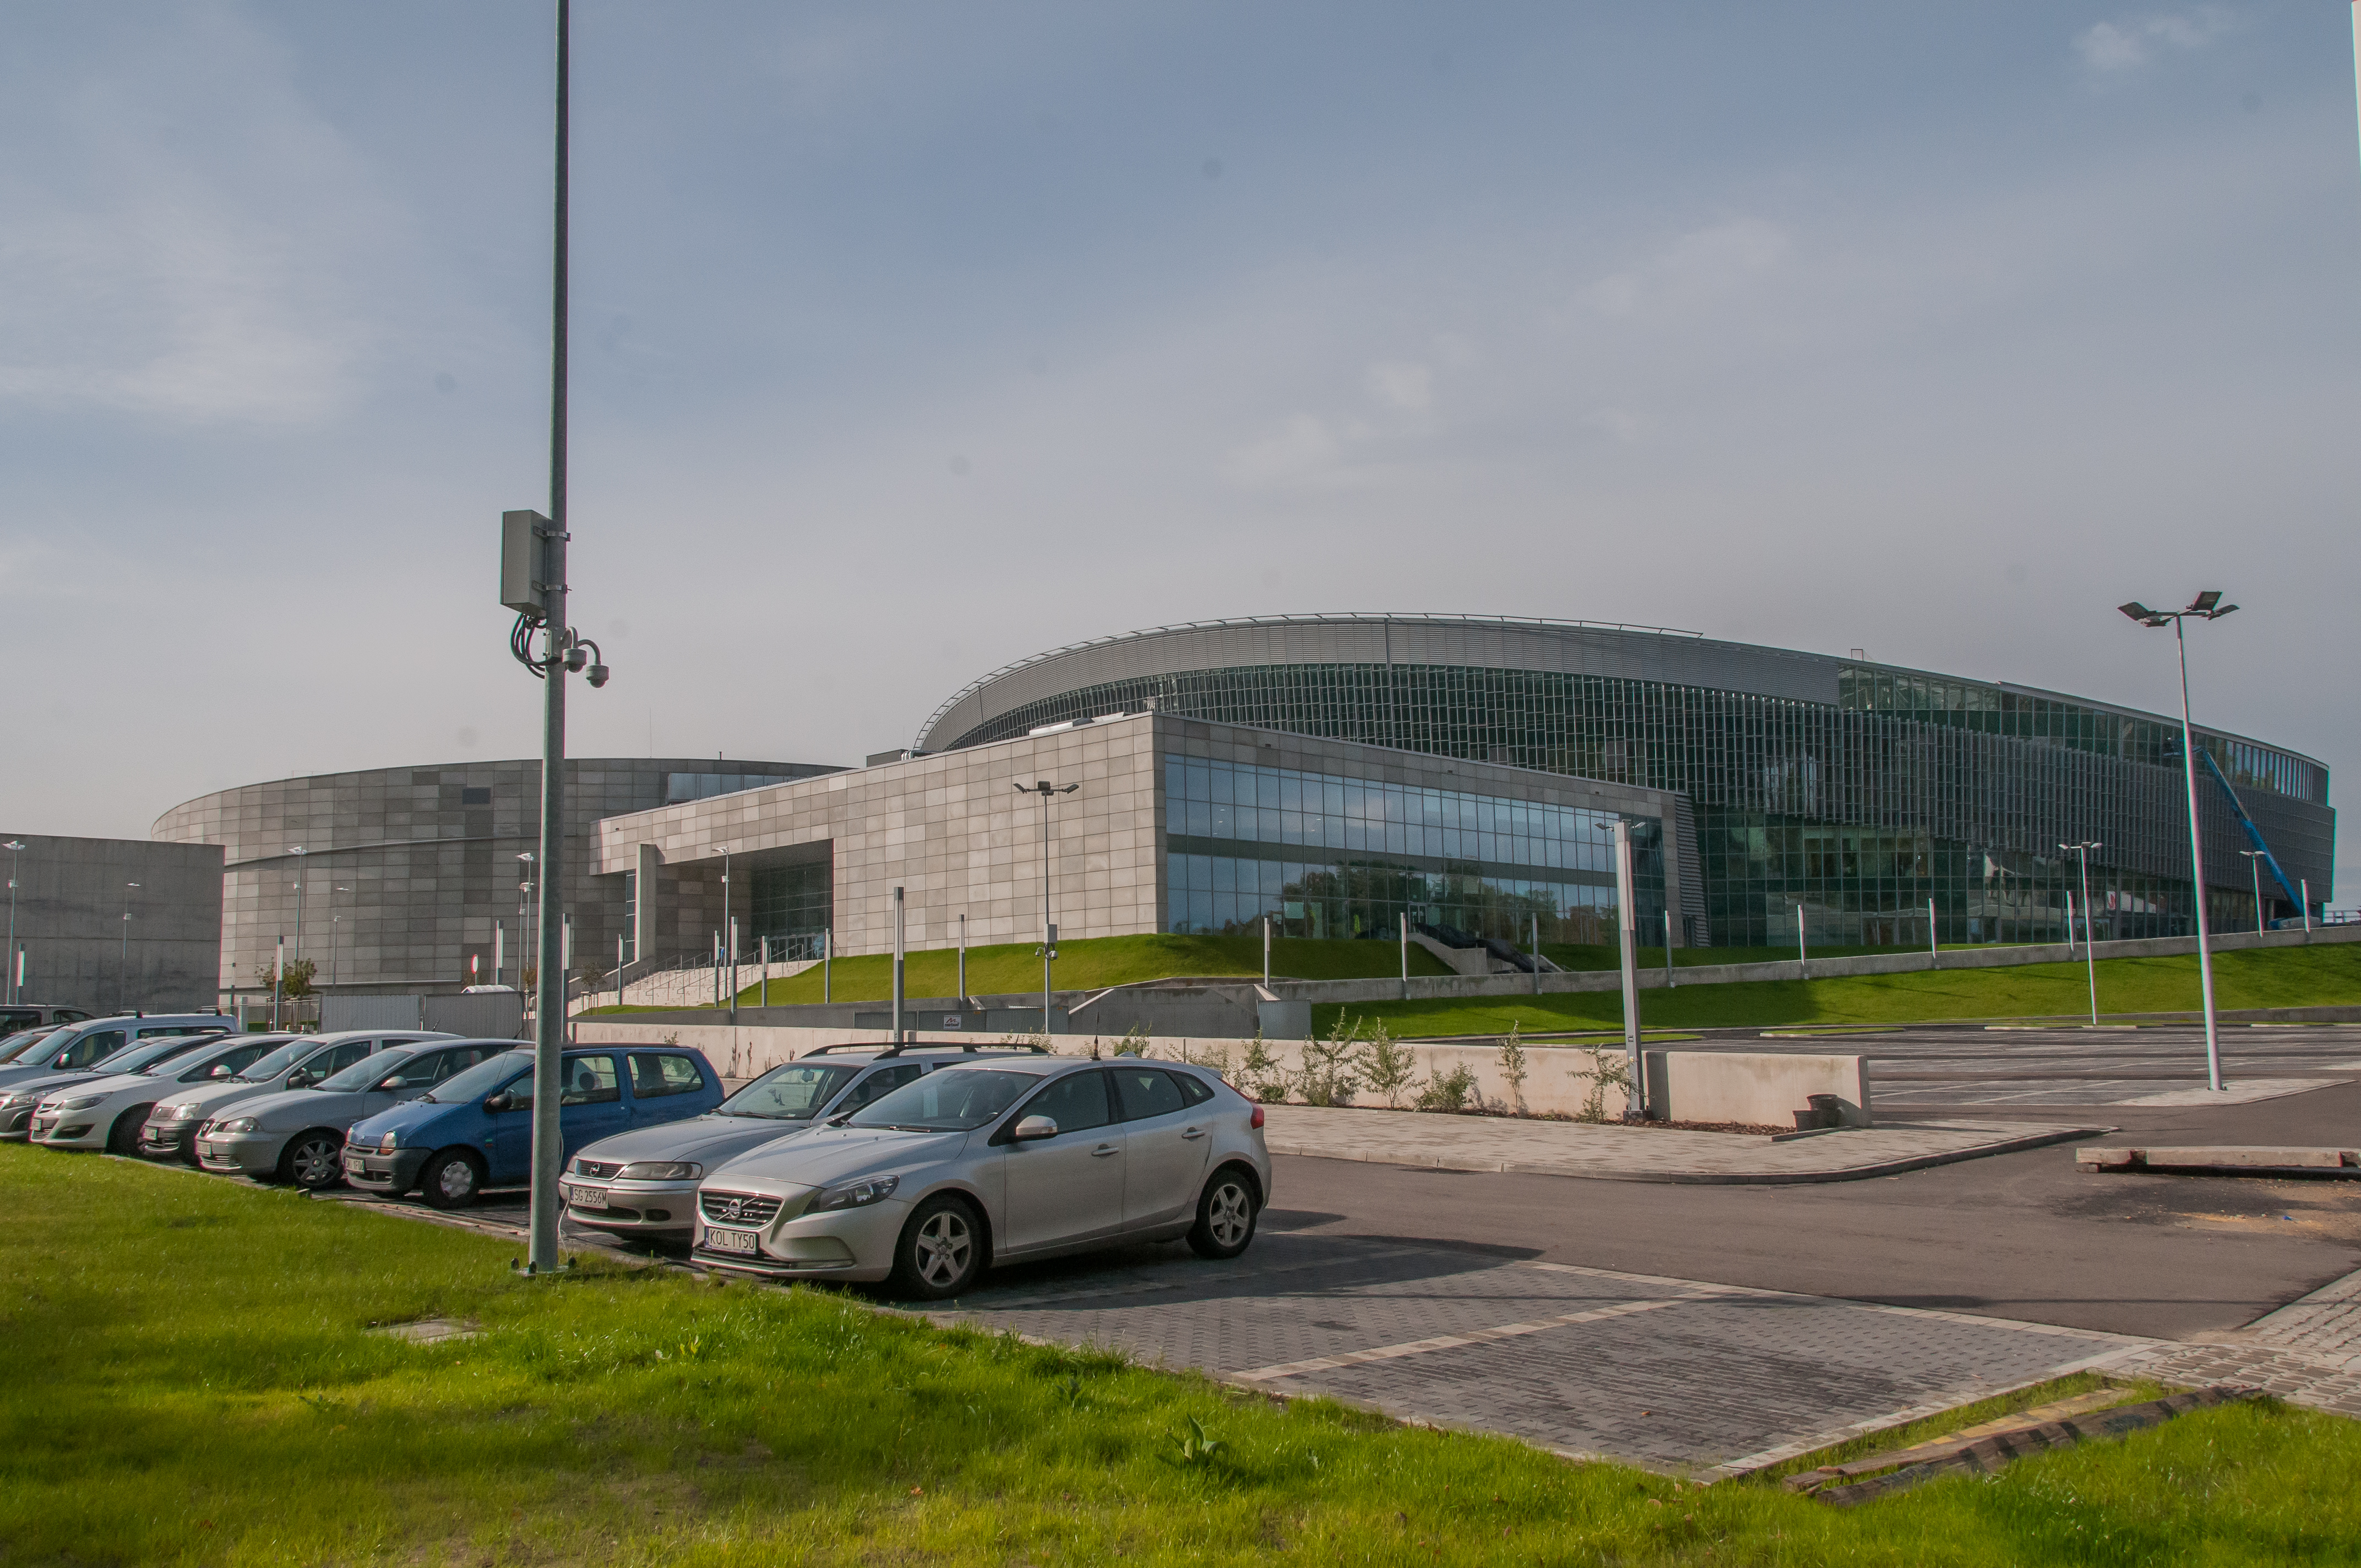 Gliwice Arena